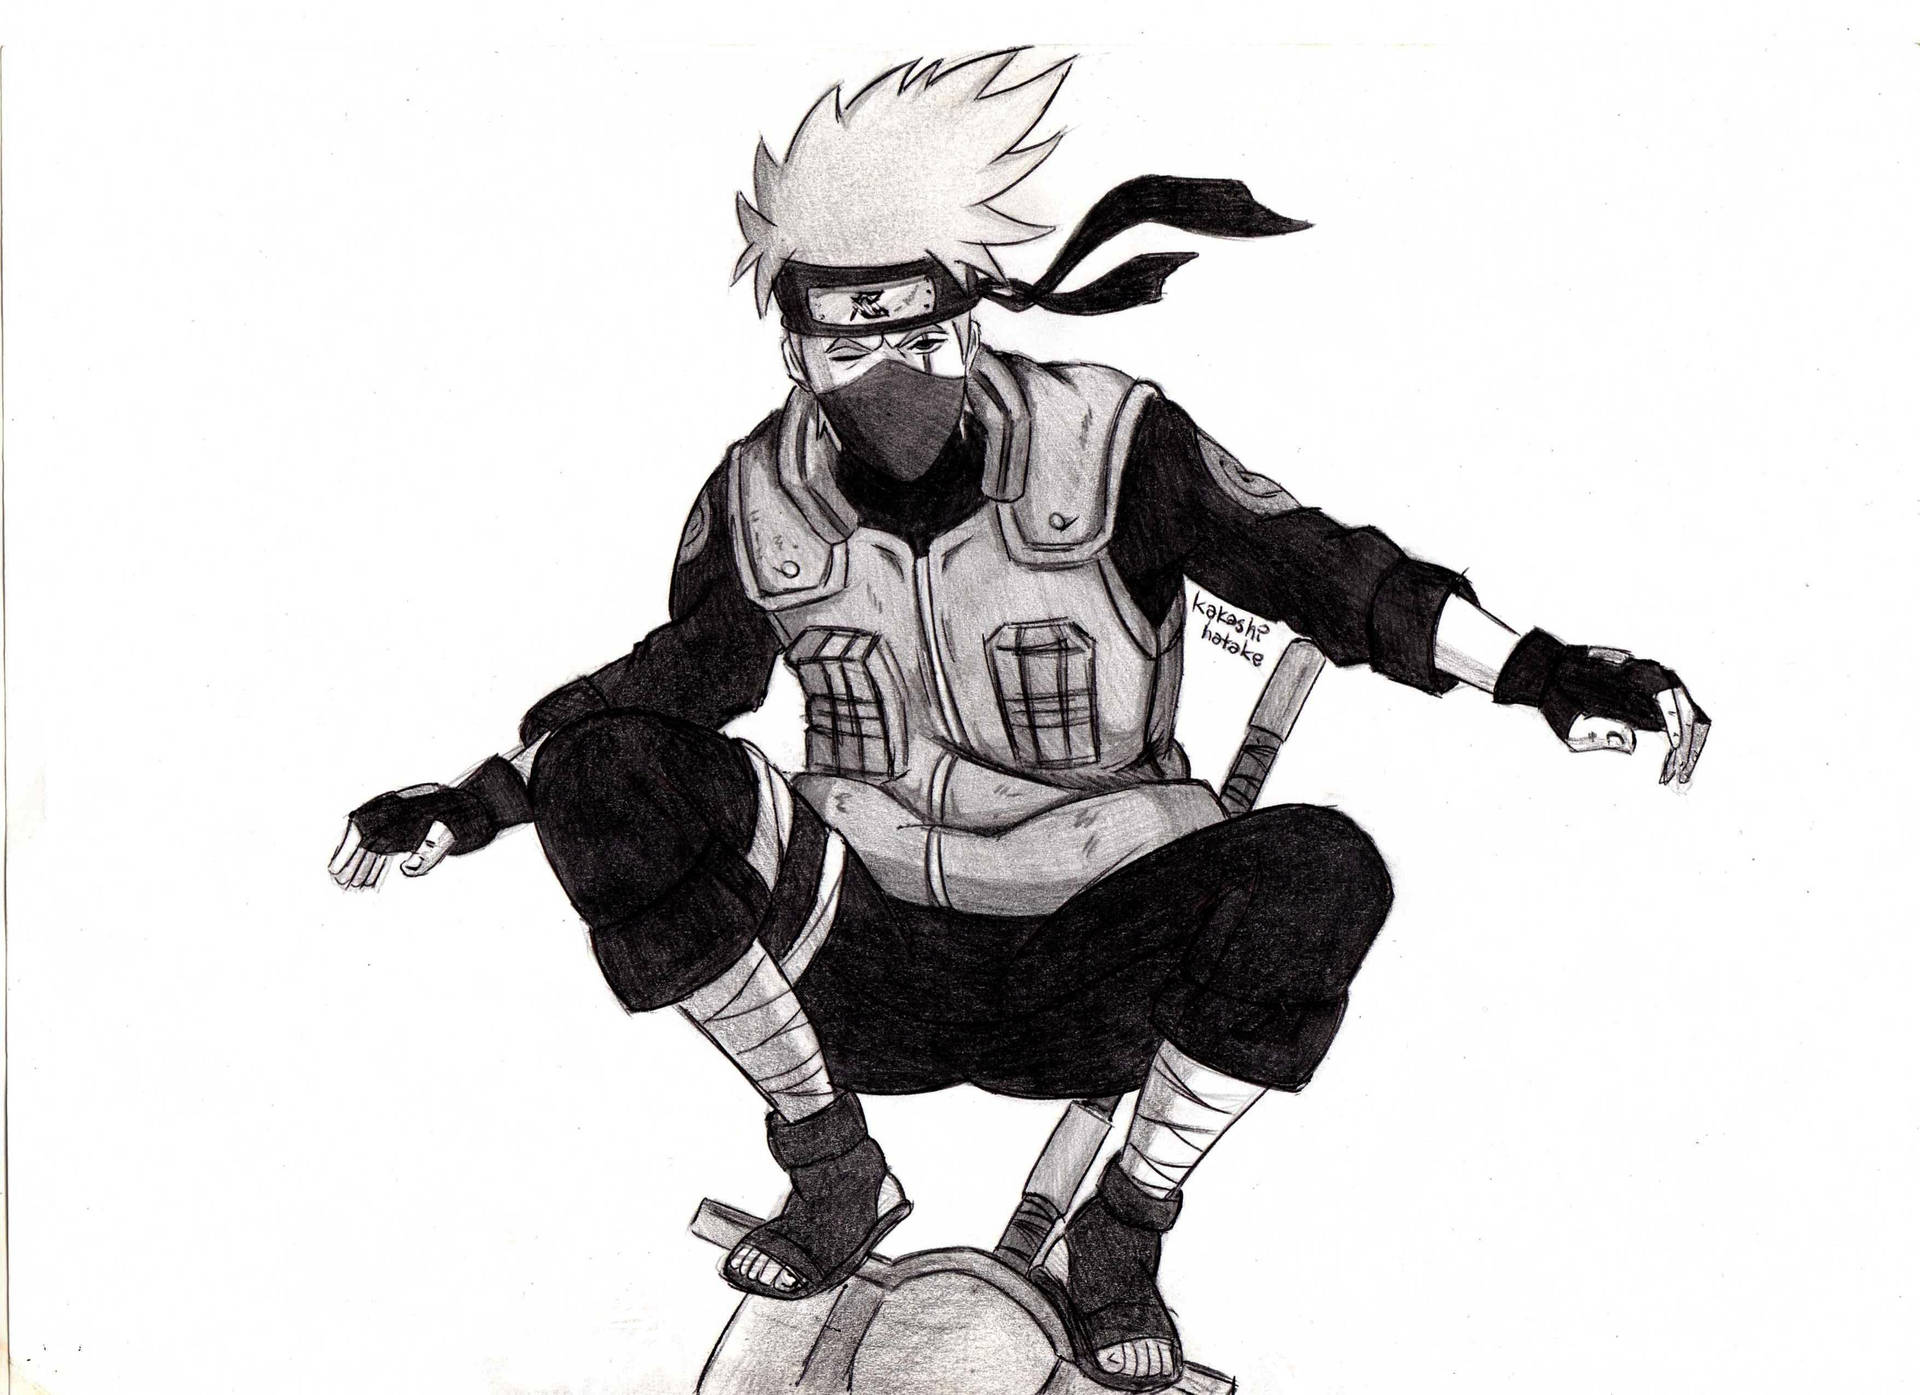 Sketch of Kakashi Hatake, a popular character from the manga and anime series Naruto Wallpaper